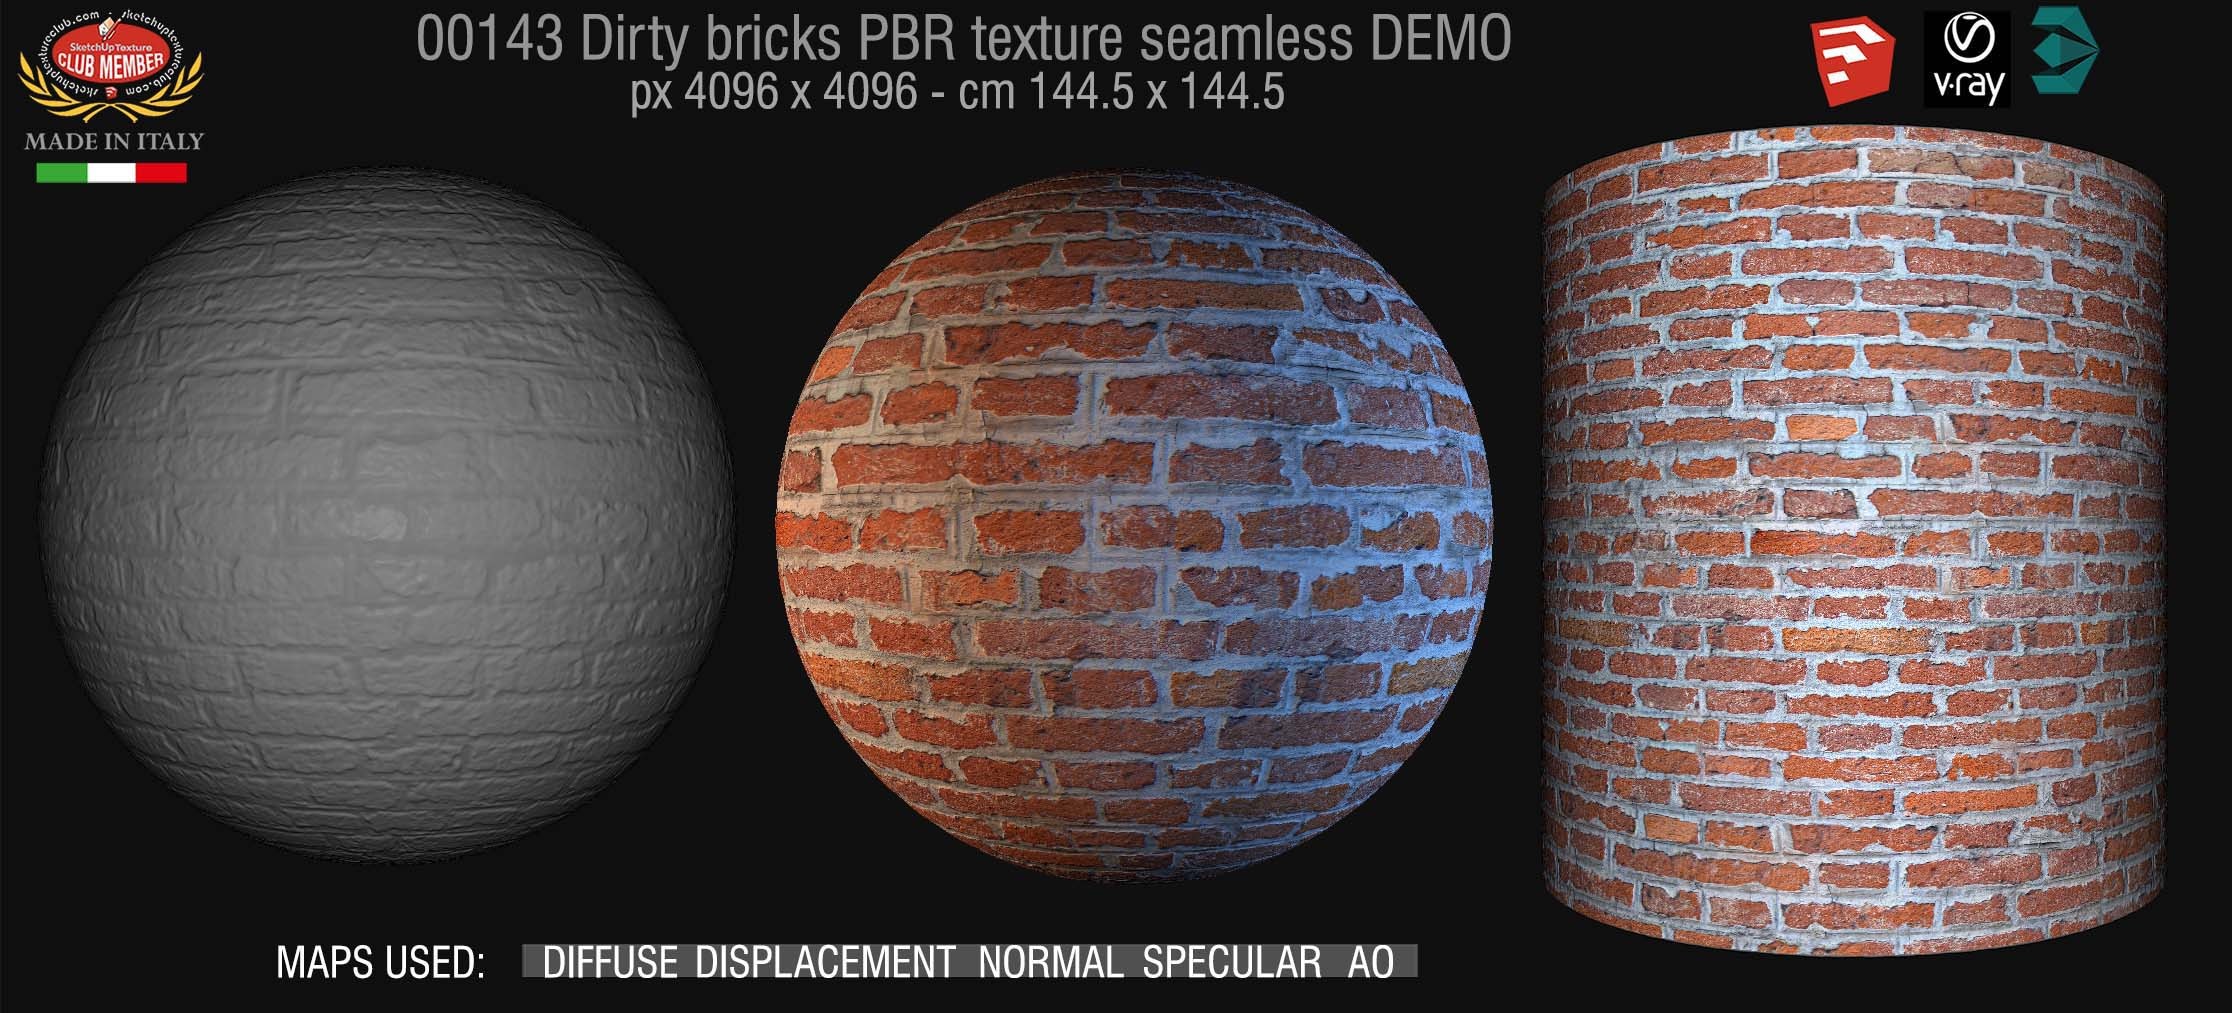 00143 Dirty bricks PBR texture seamless DEMO